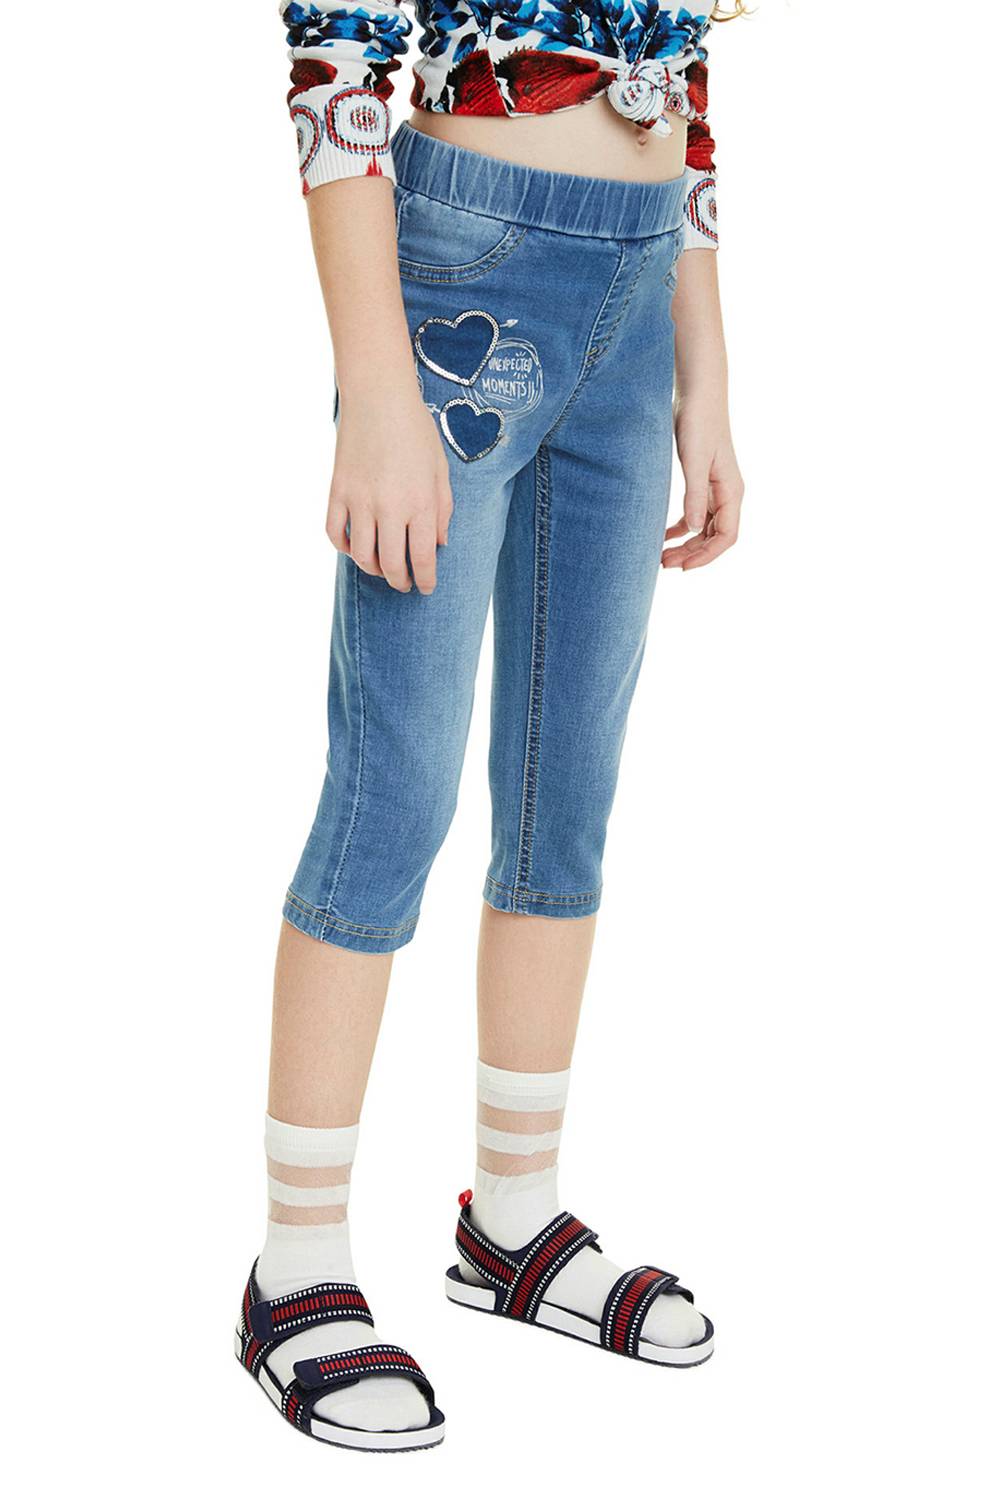 Desigual - Jeans Niña